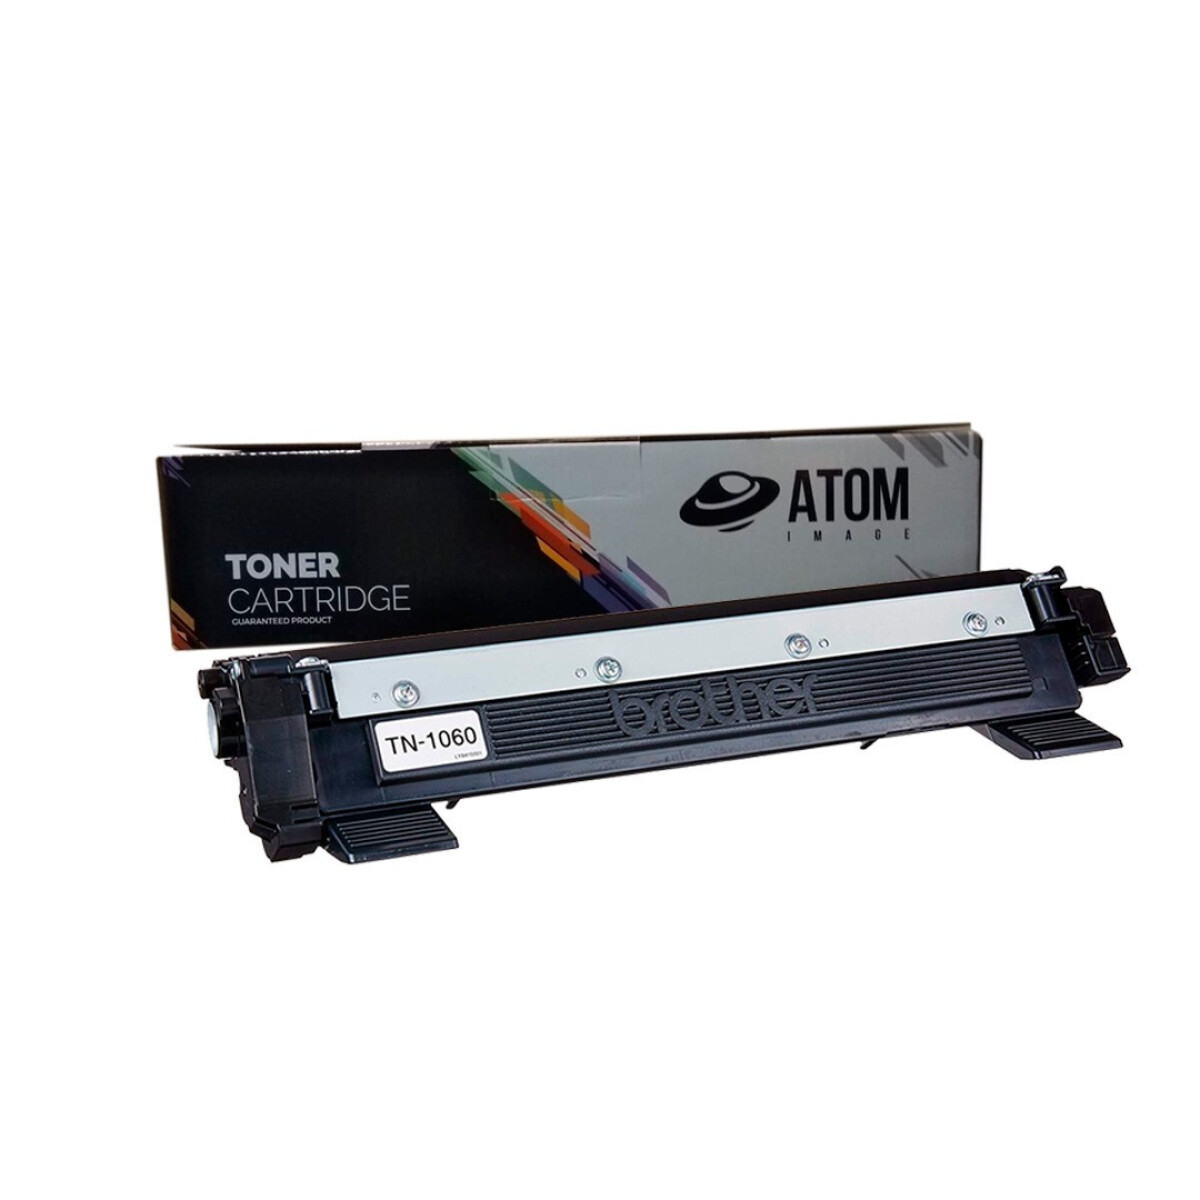 Toner Compatible Brother TN1060 Cartridge Atom - 001 